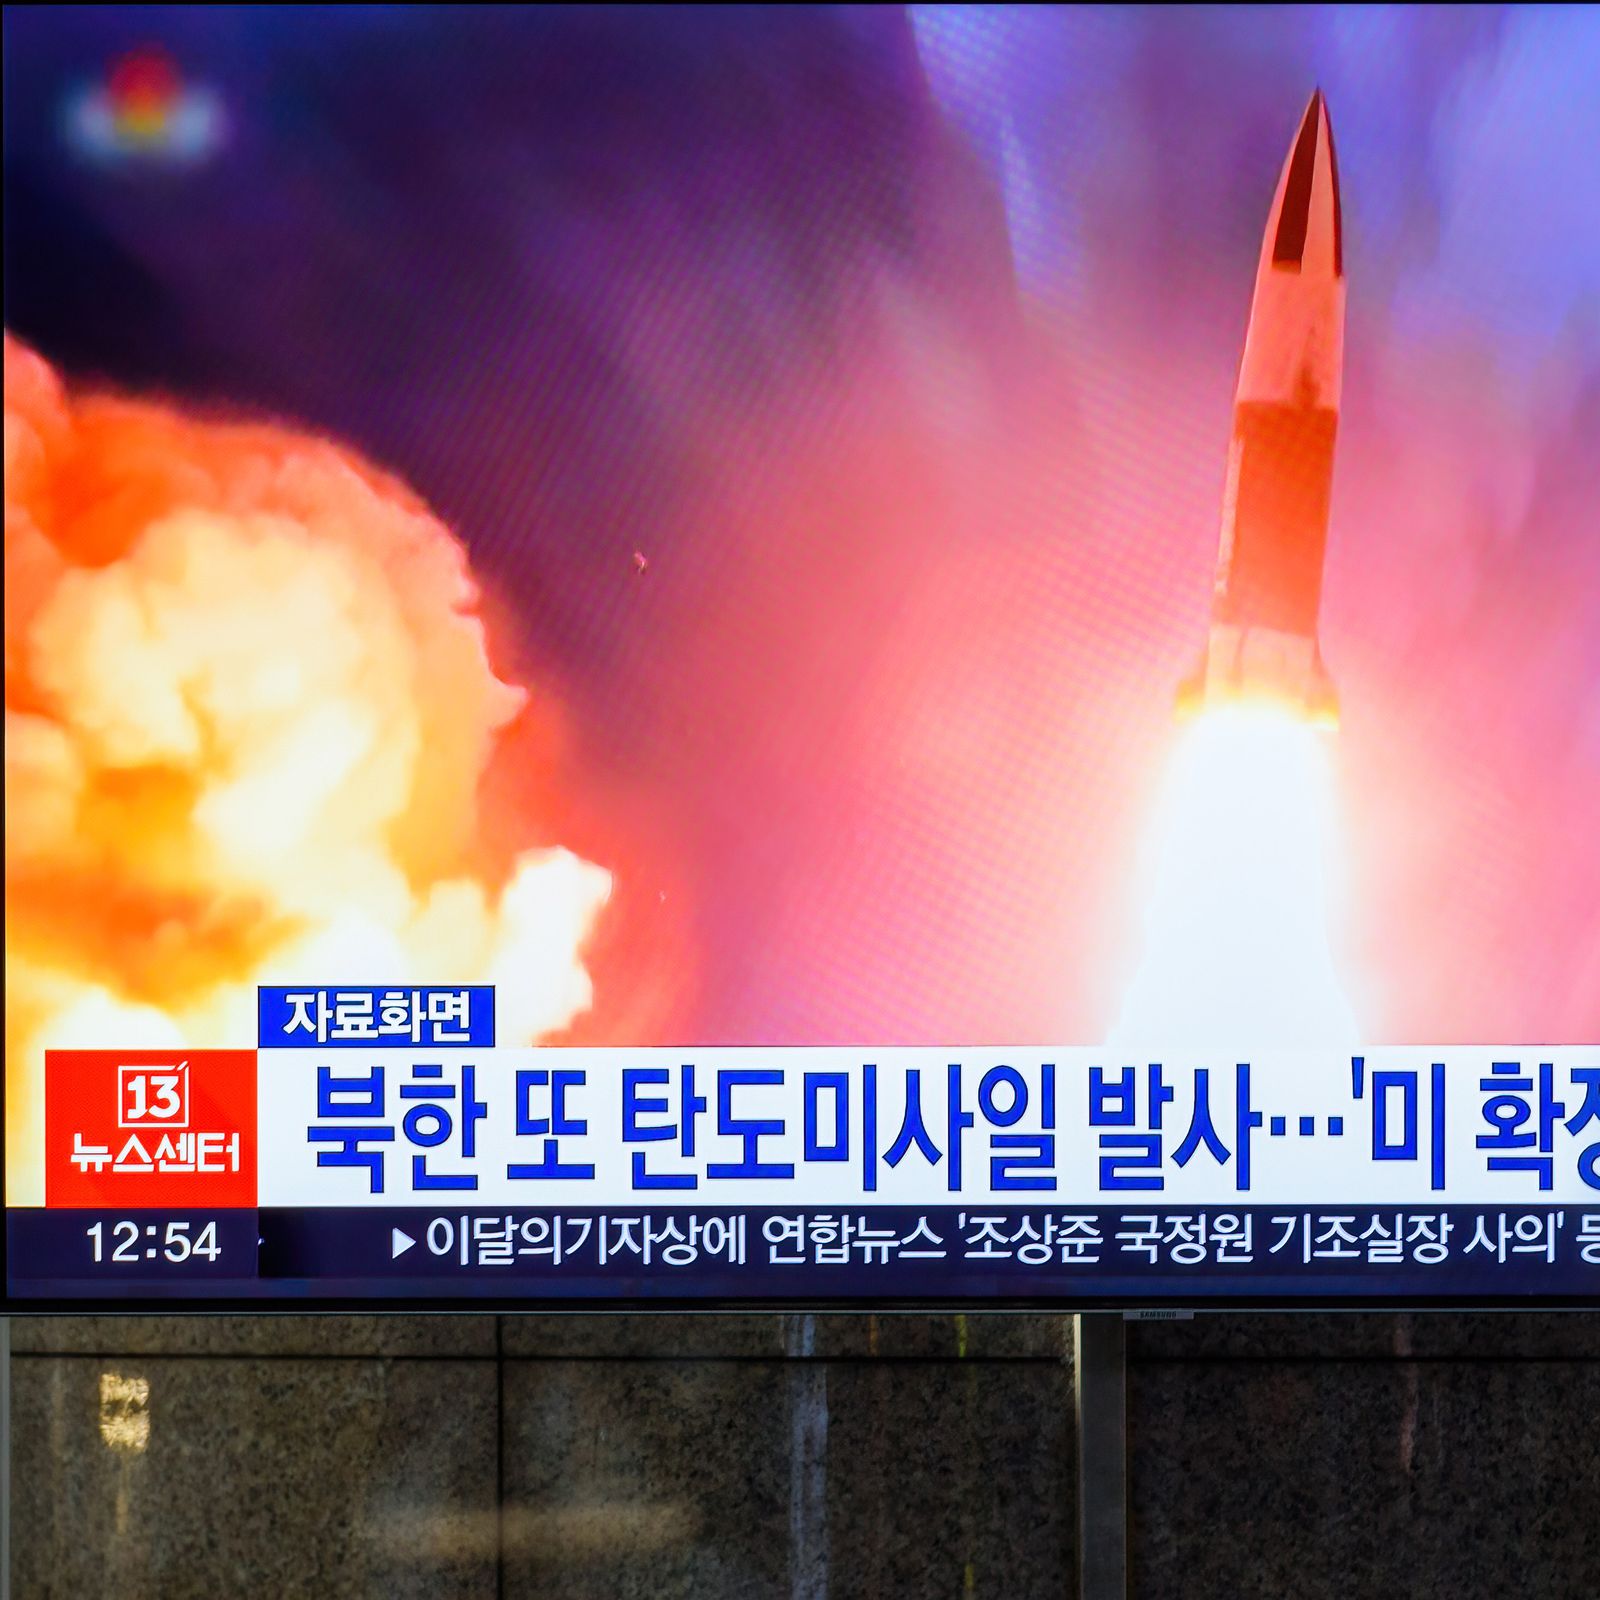 North Korea launches 2 ballistic missiles toward sea in protest of